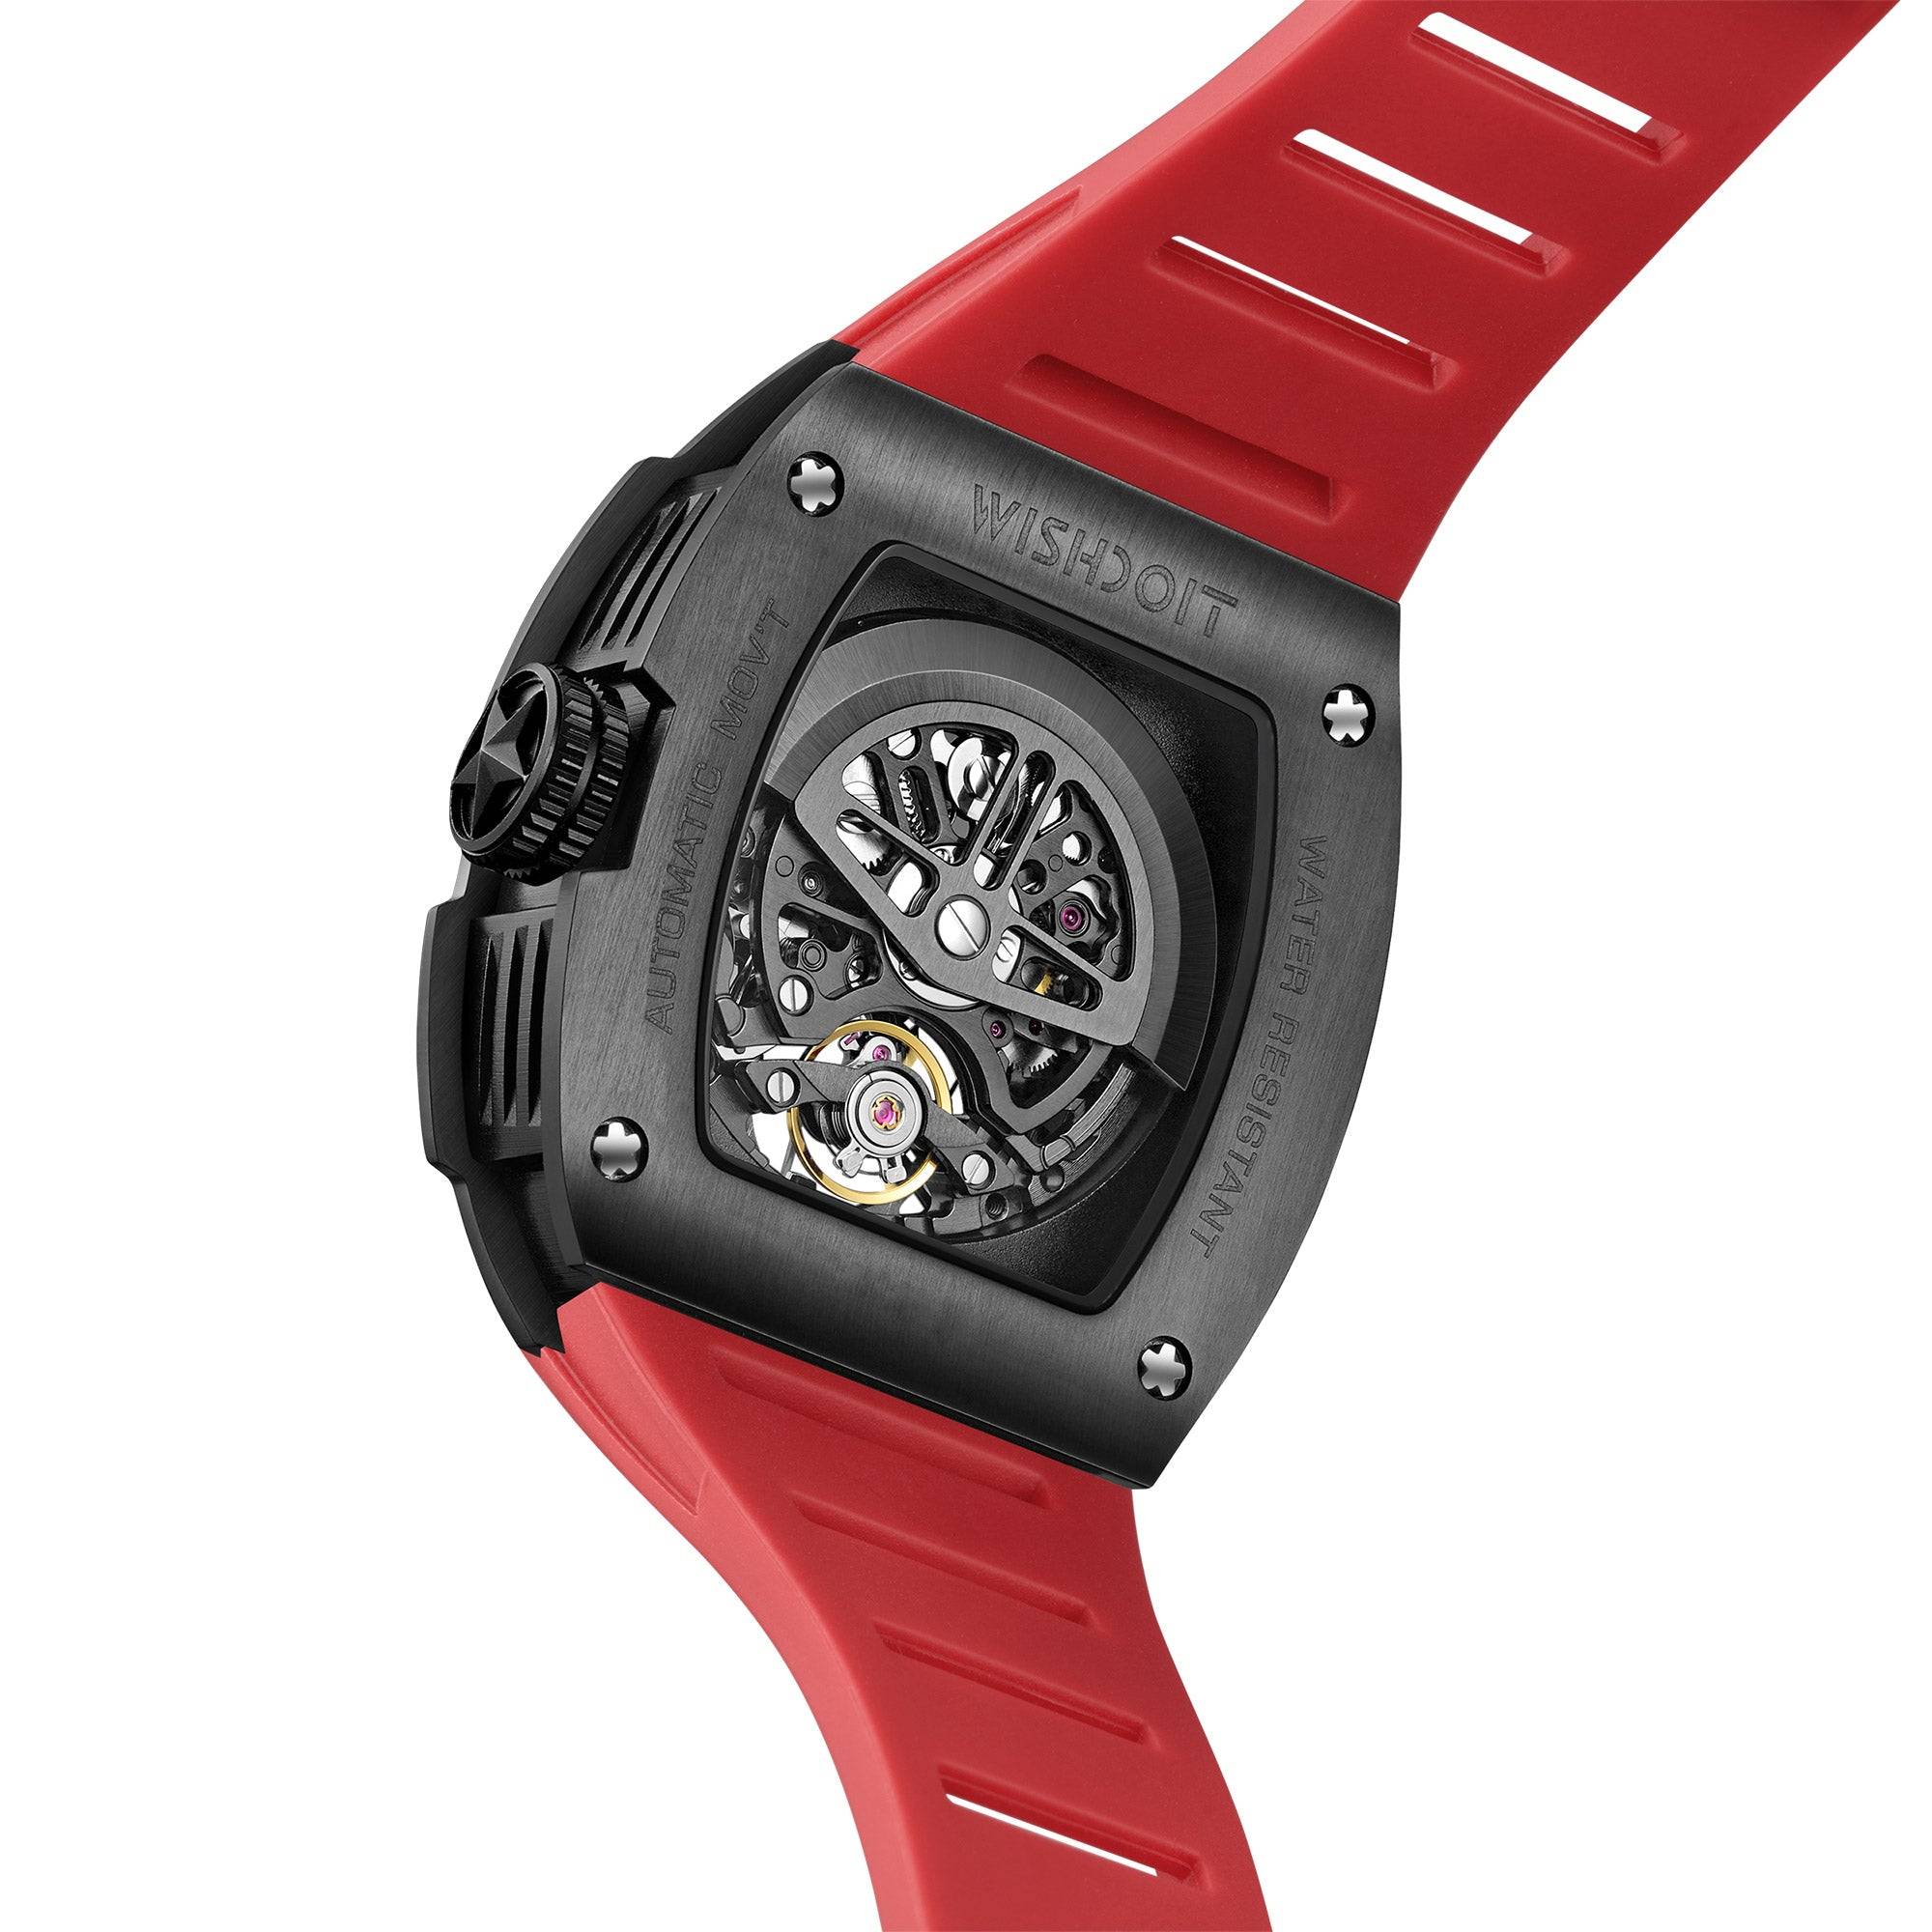 Best Mens Mechanical Watch-Pioneer Automatic Black Red Watch| Wishdoit